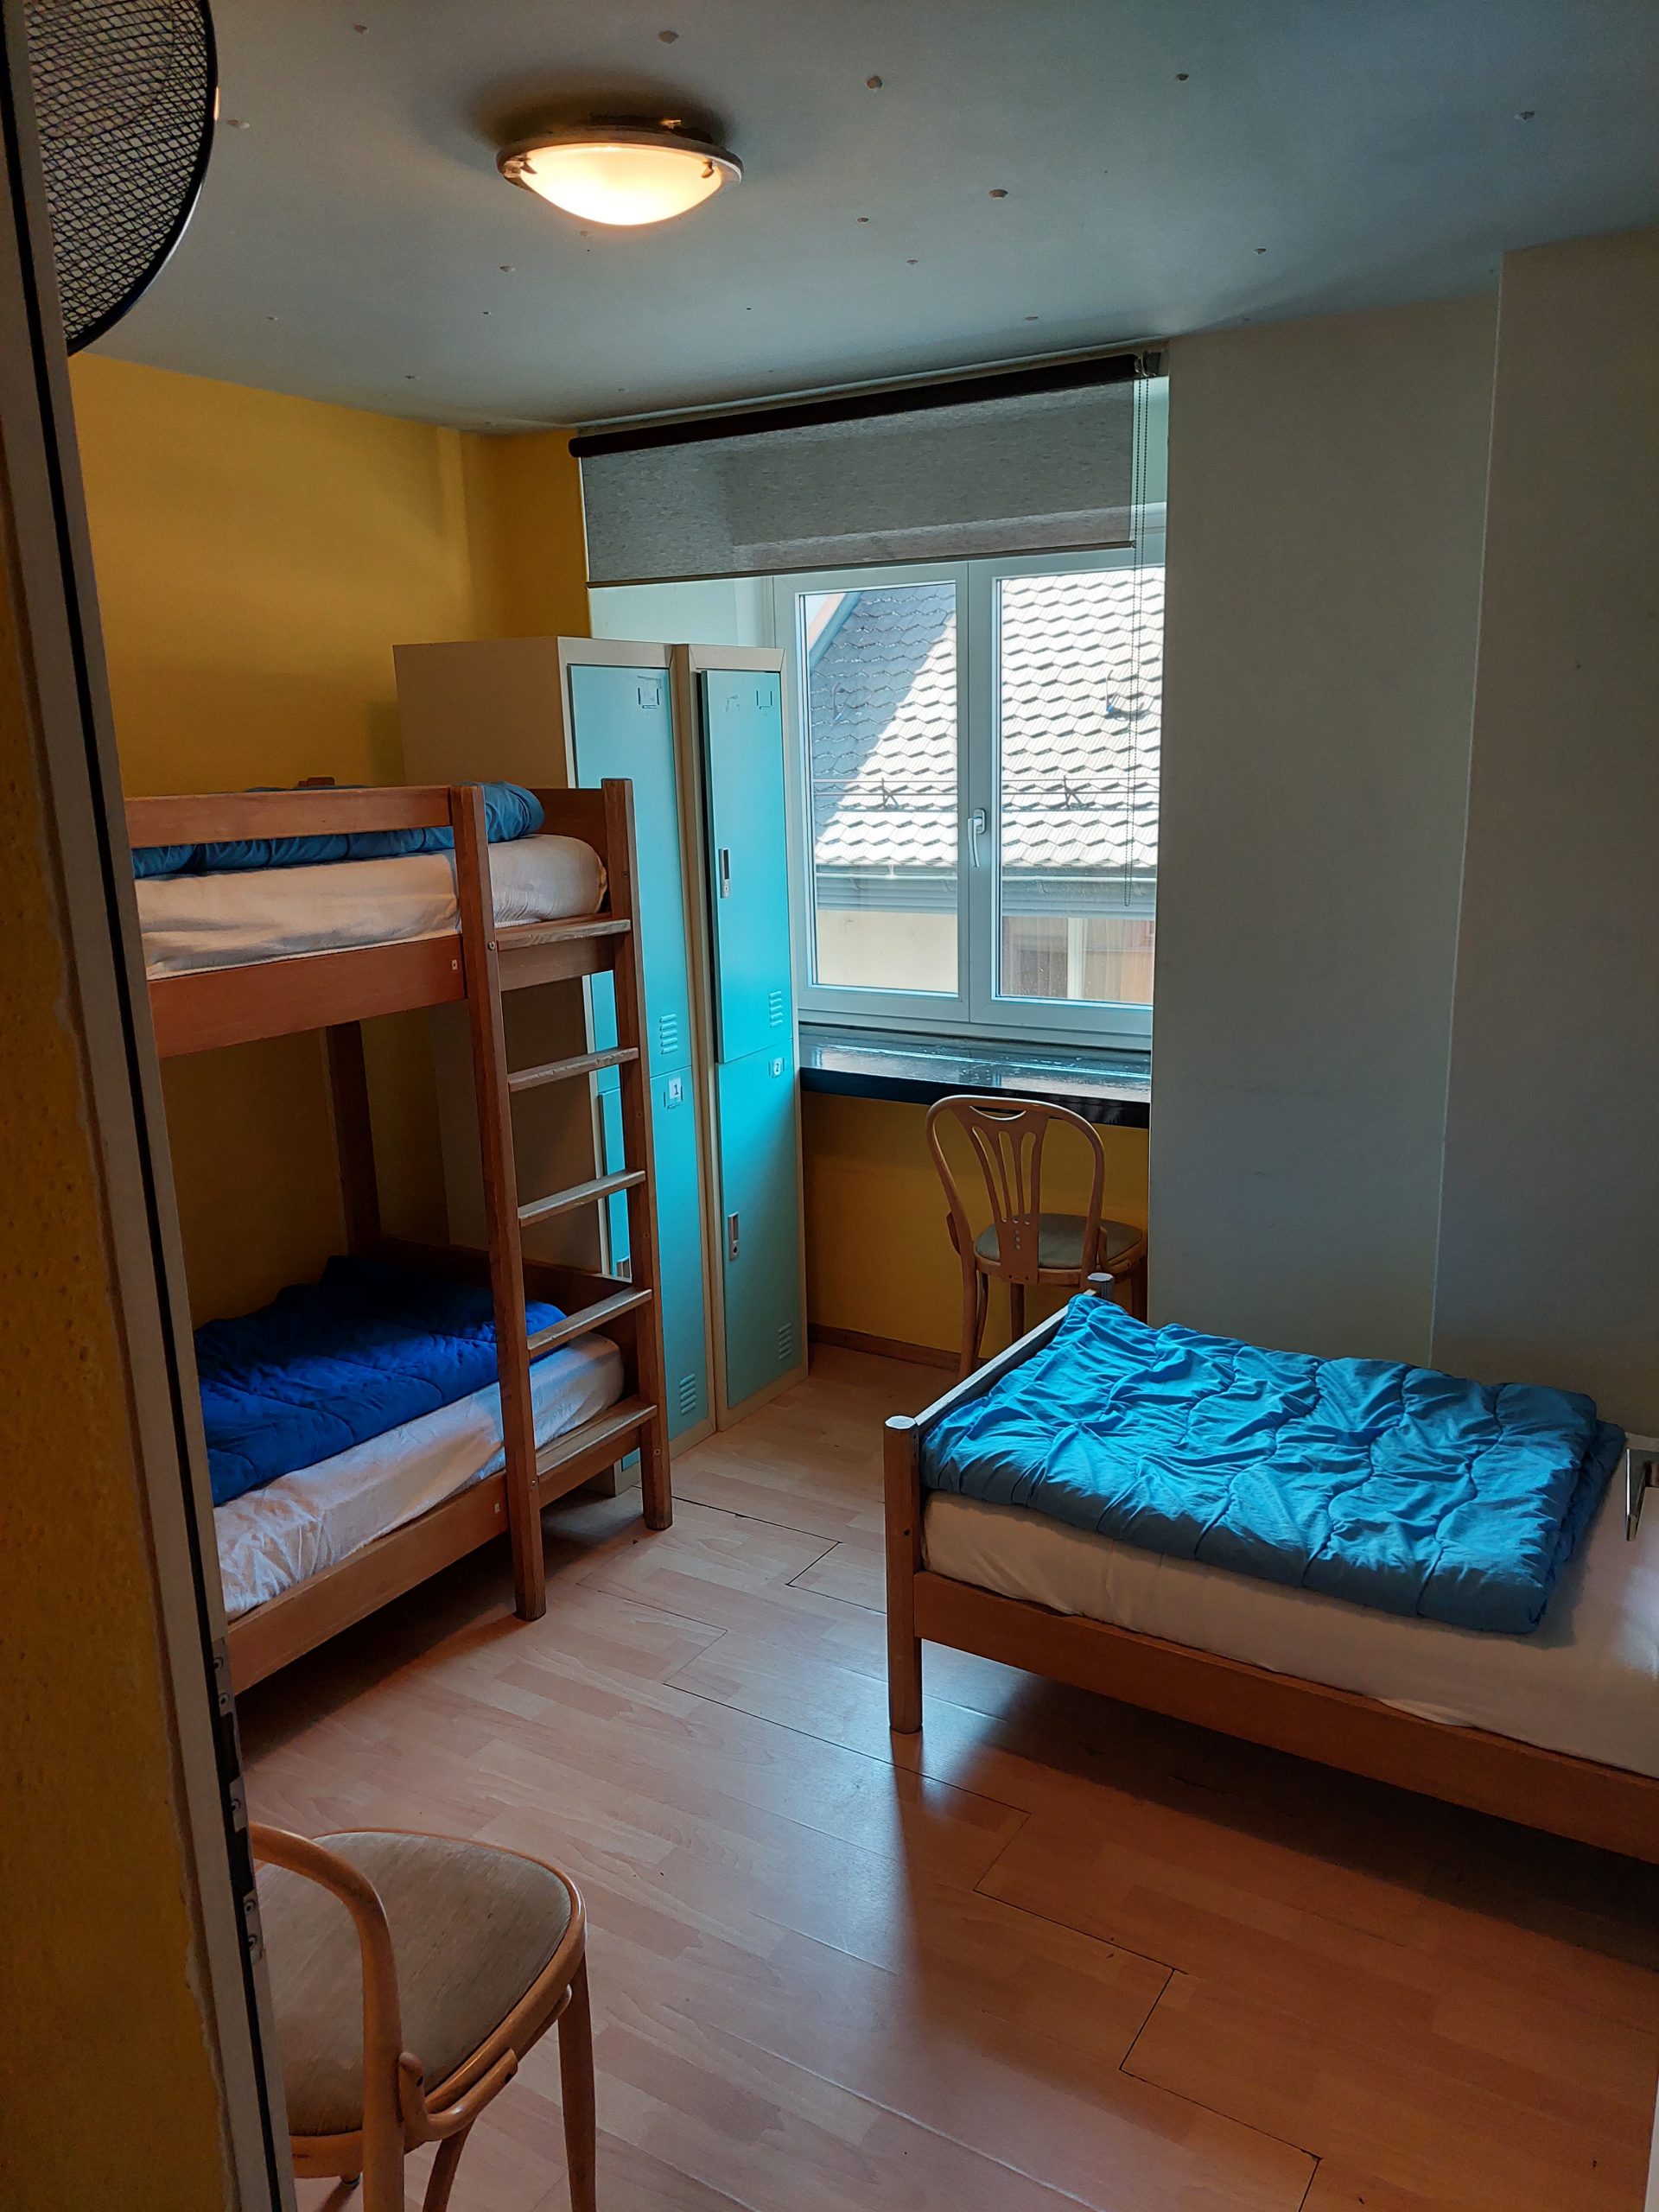 3-bed female dorm 40/50